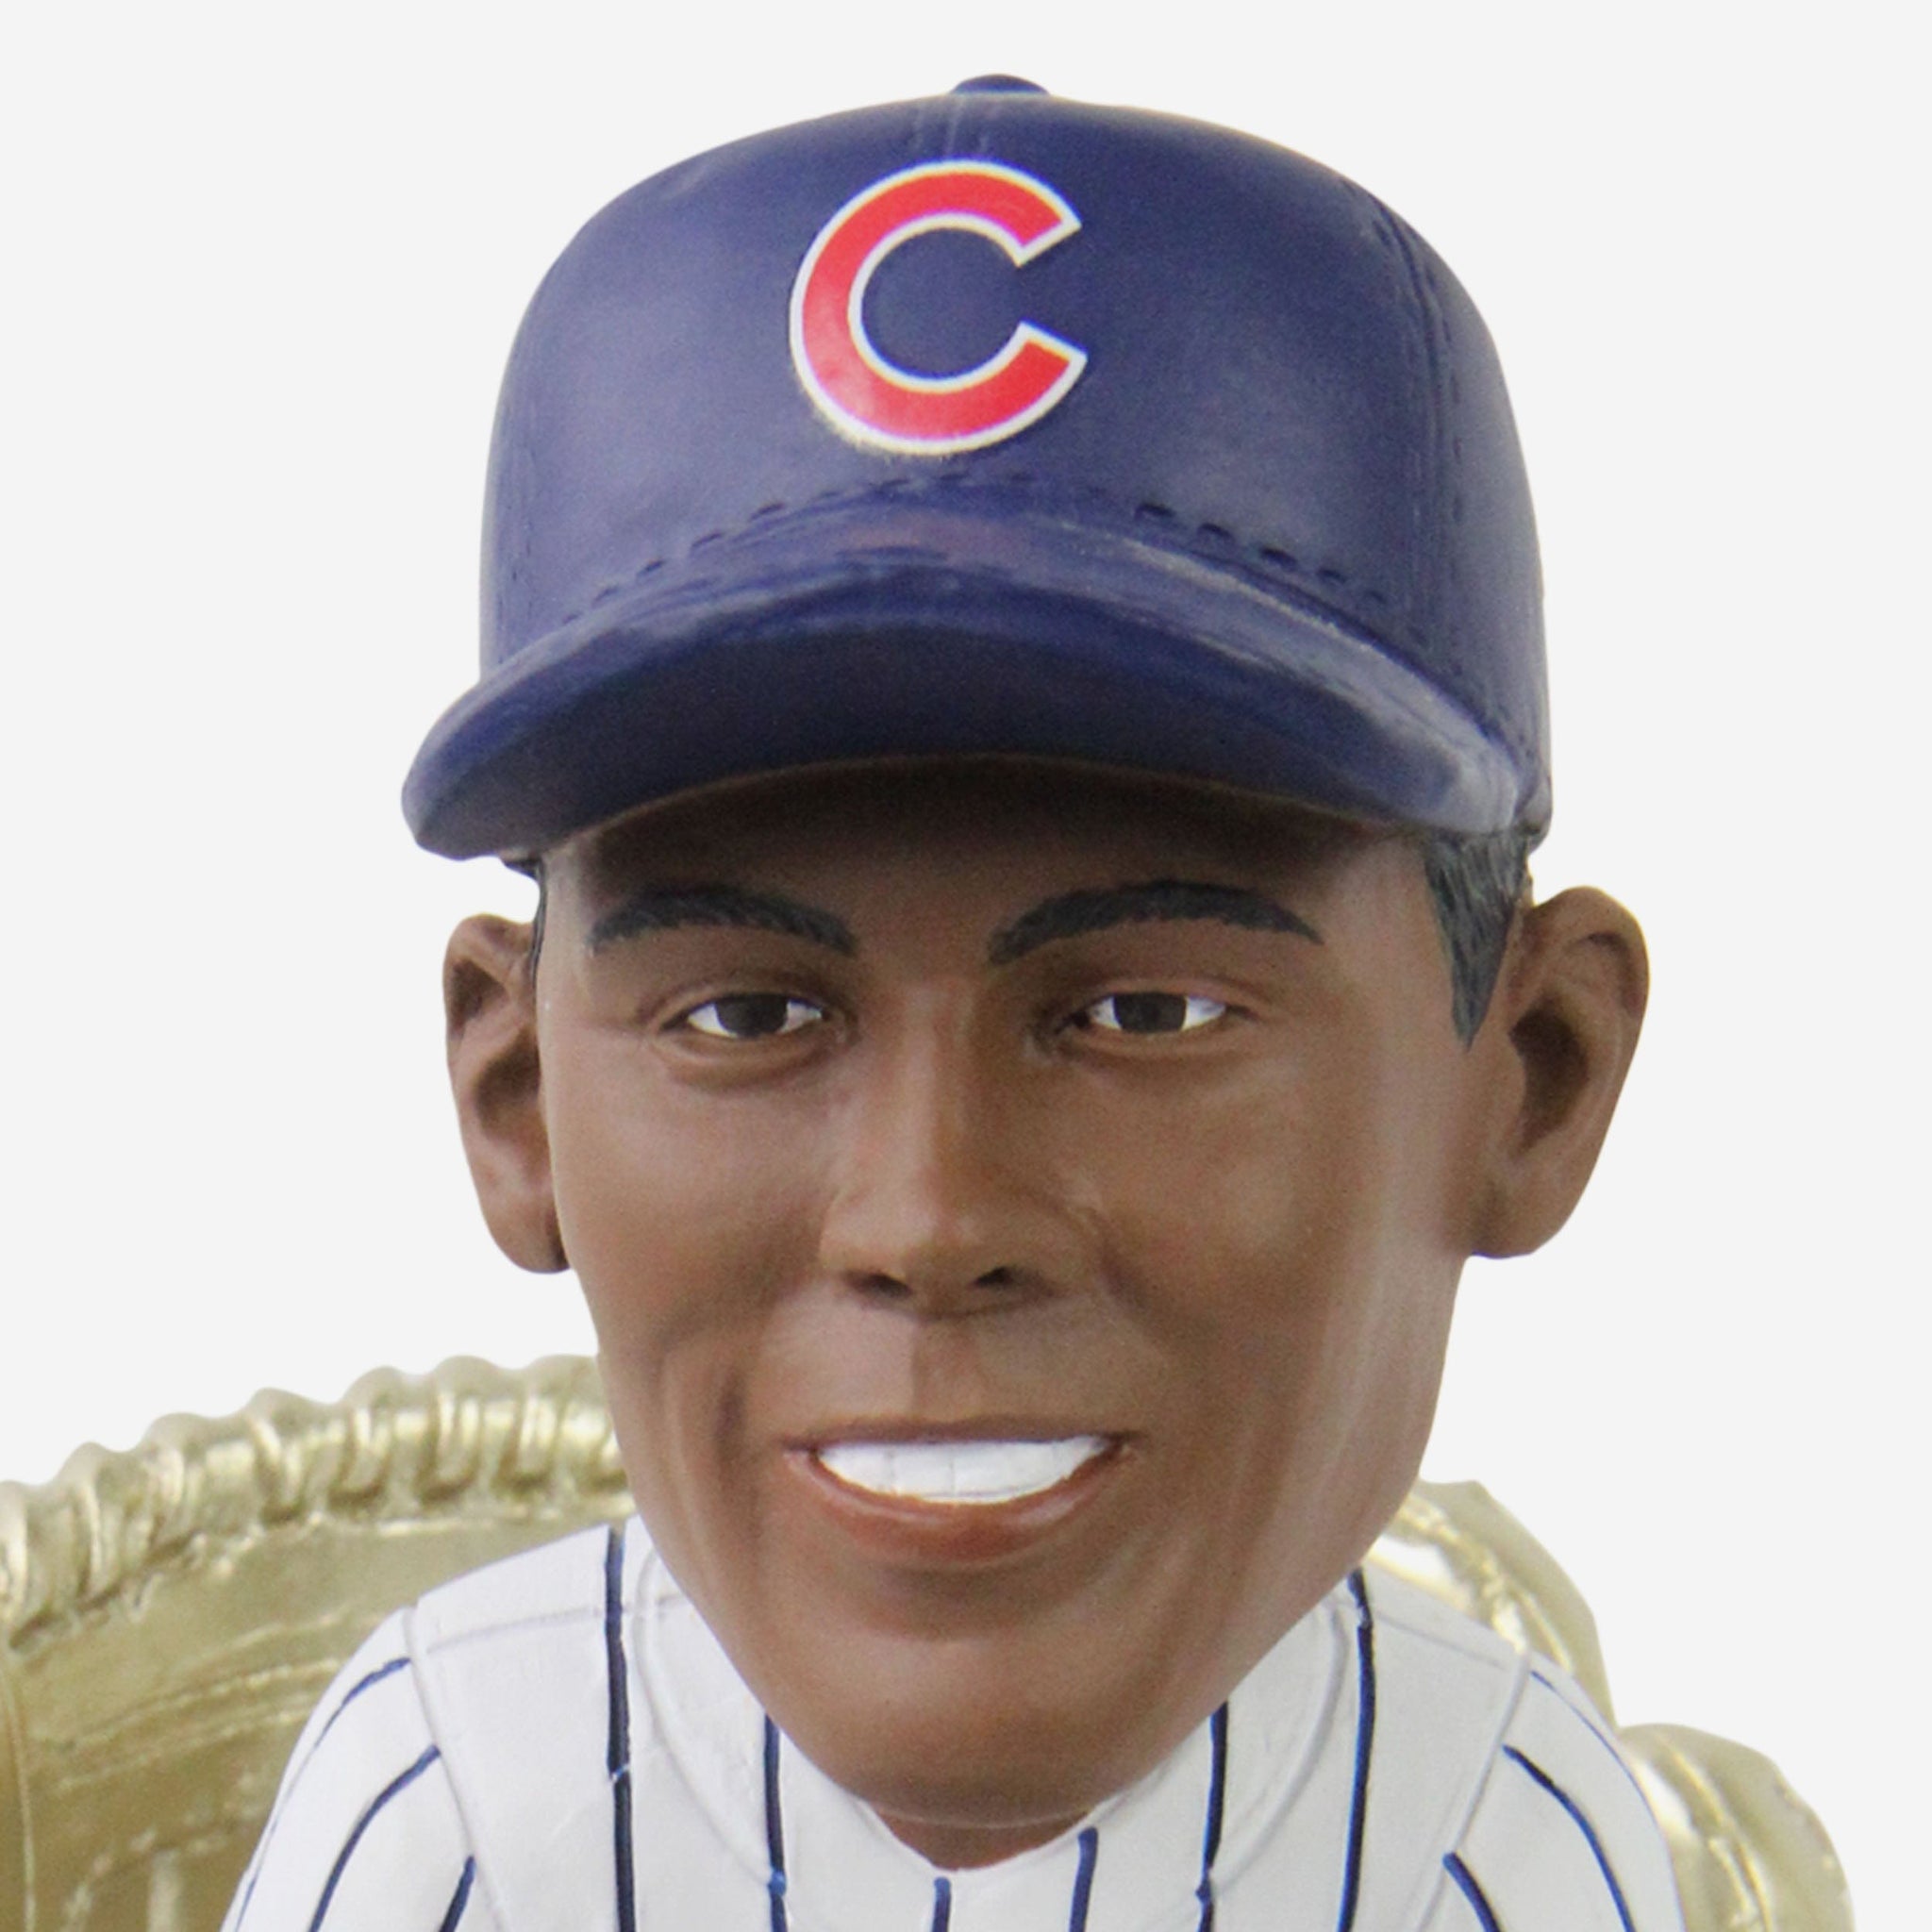 Ernie Banks Chicago Cubs 2023 Home Jersey Bighead Bobblehead MLB